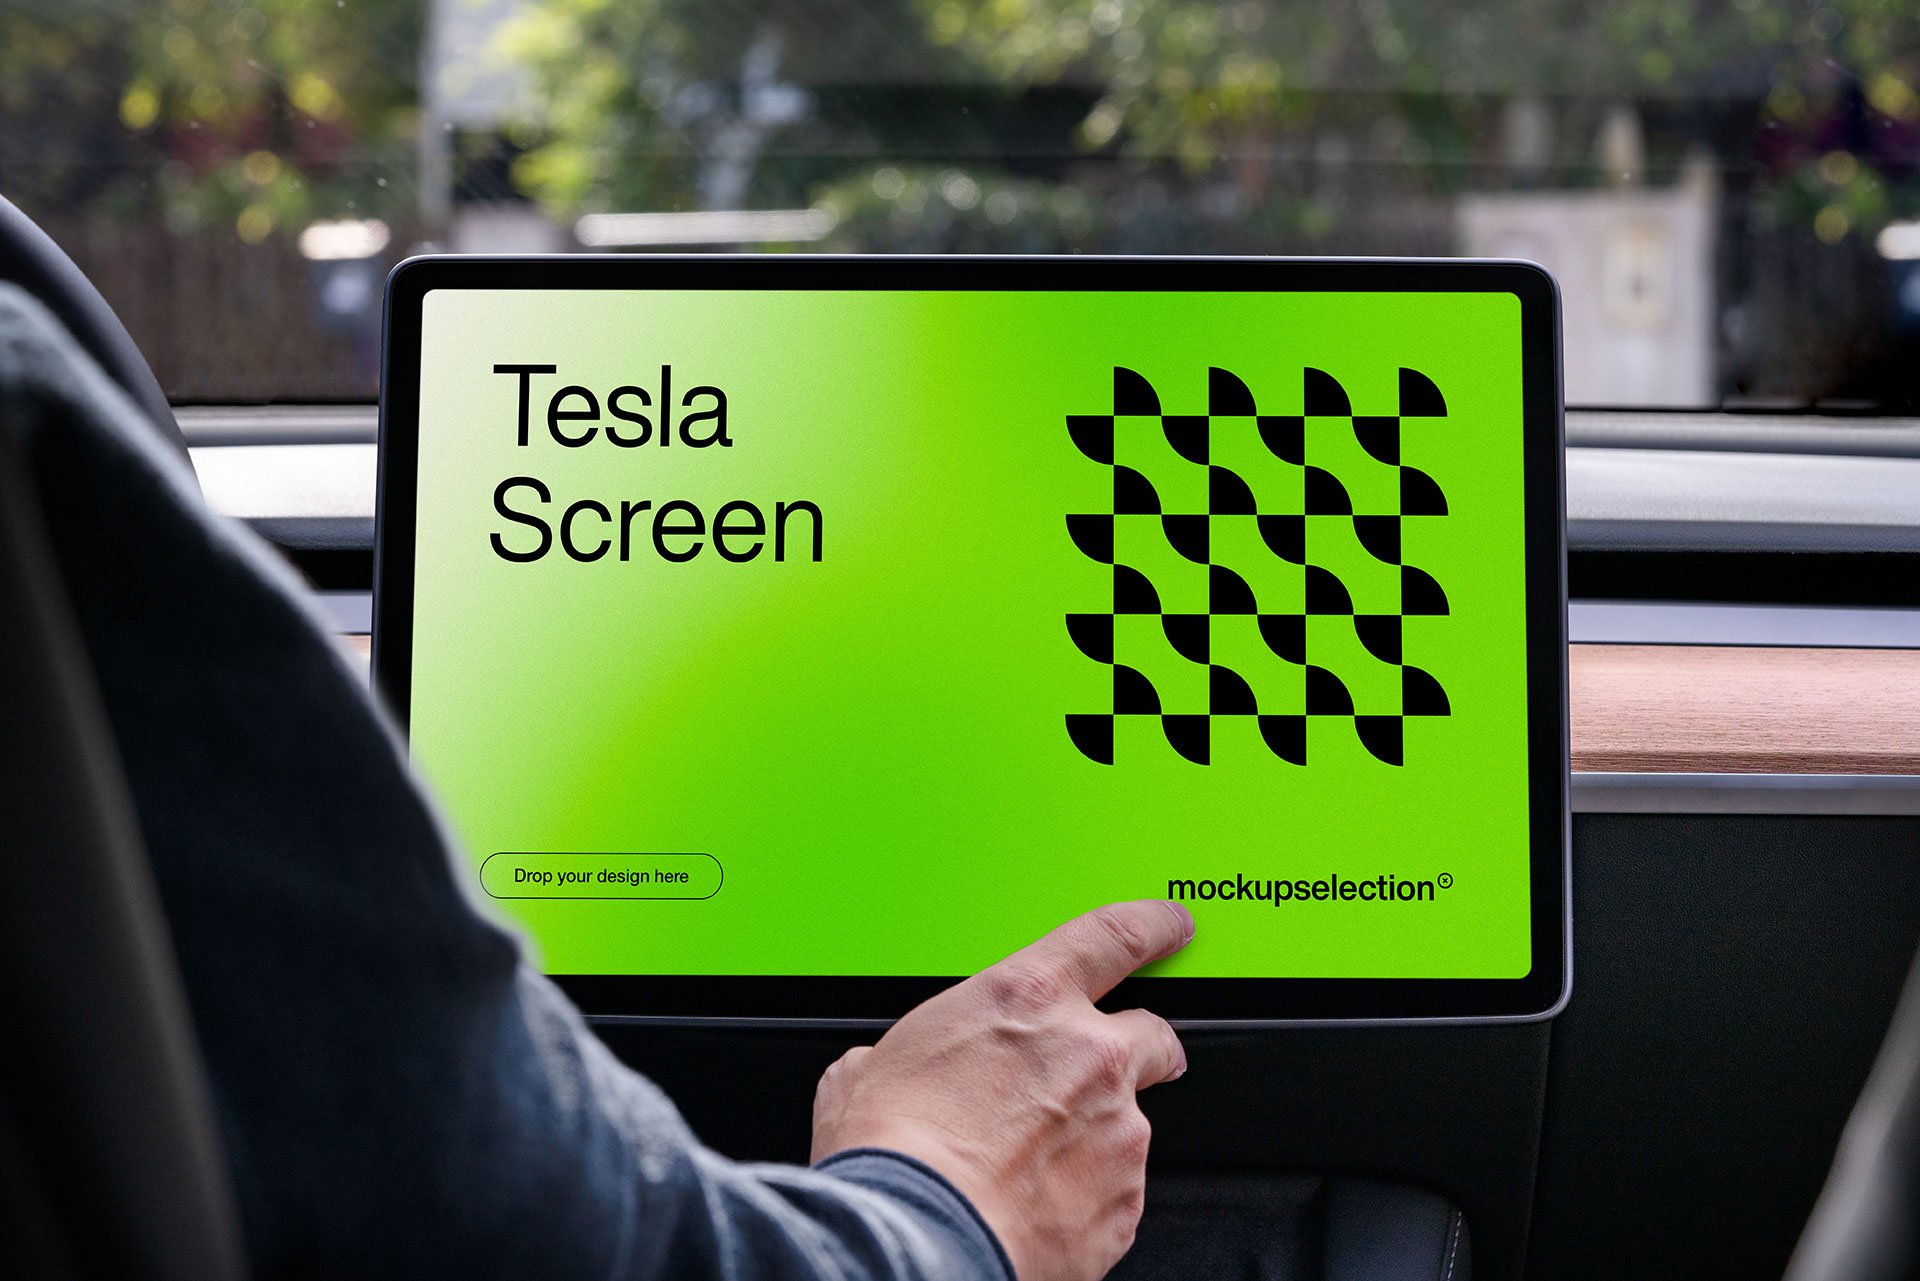 Tesla Screen Mockup - Mockup Selection